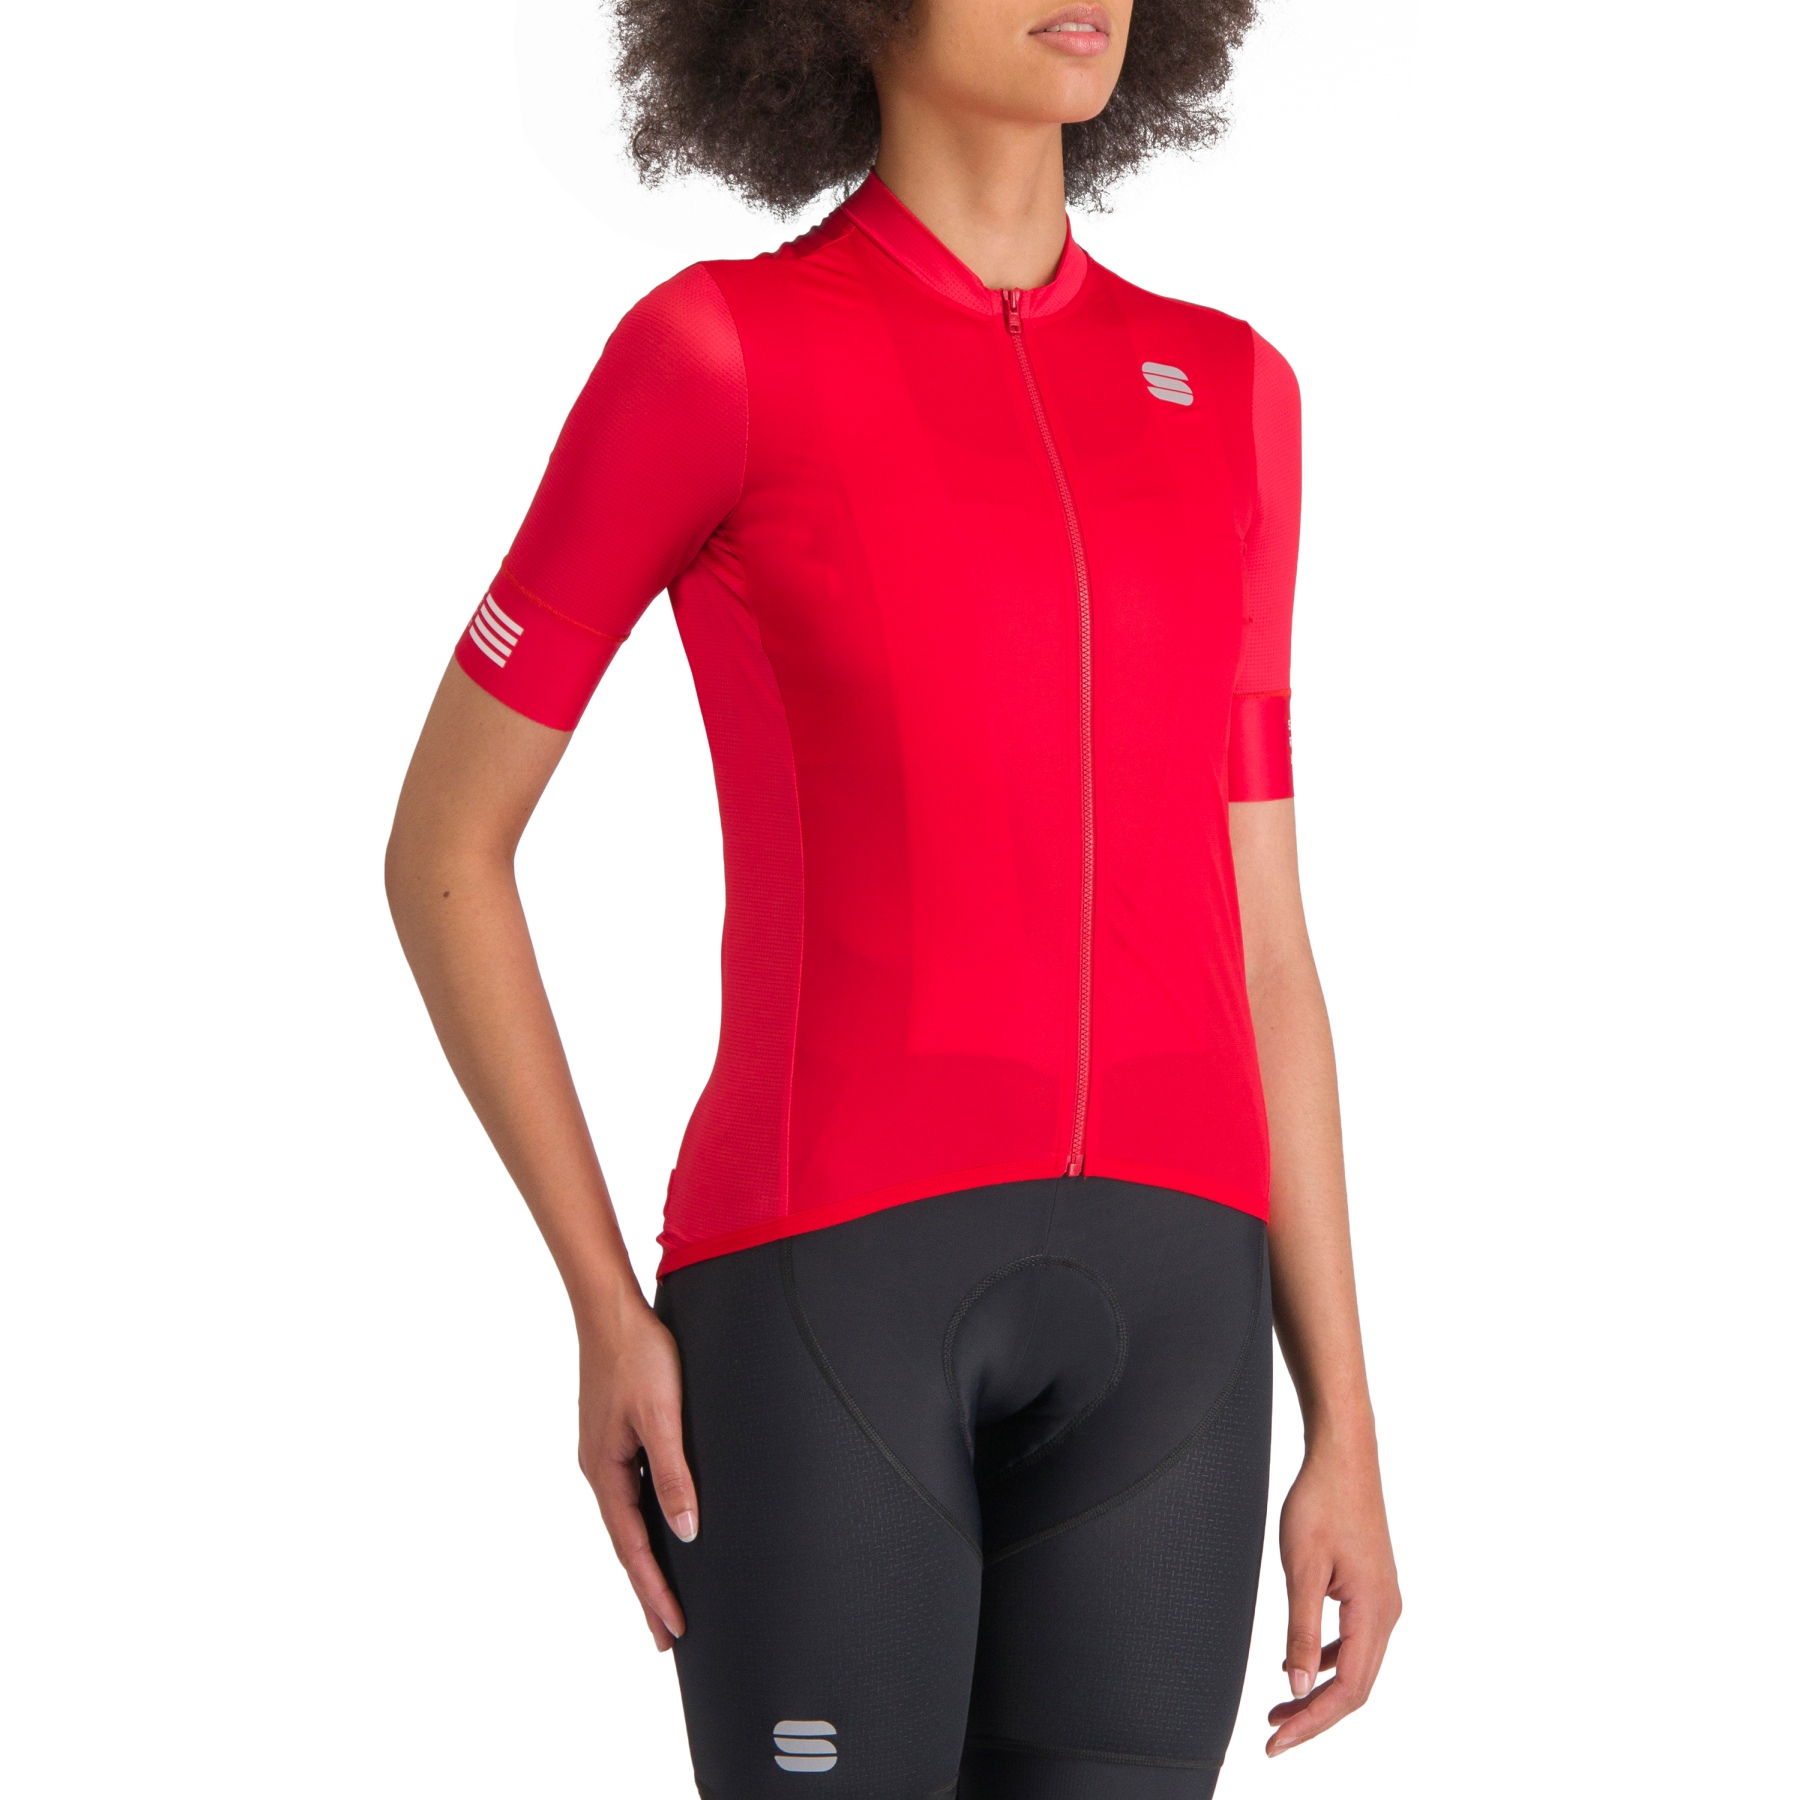 Productfoto van Sportful Srk Fietsshirt Dames - 638 Tango Red